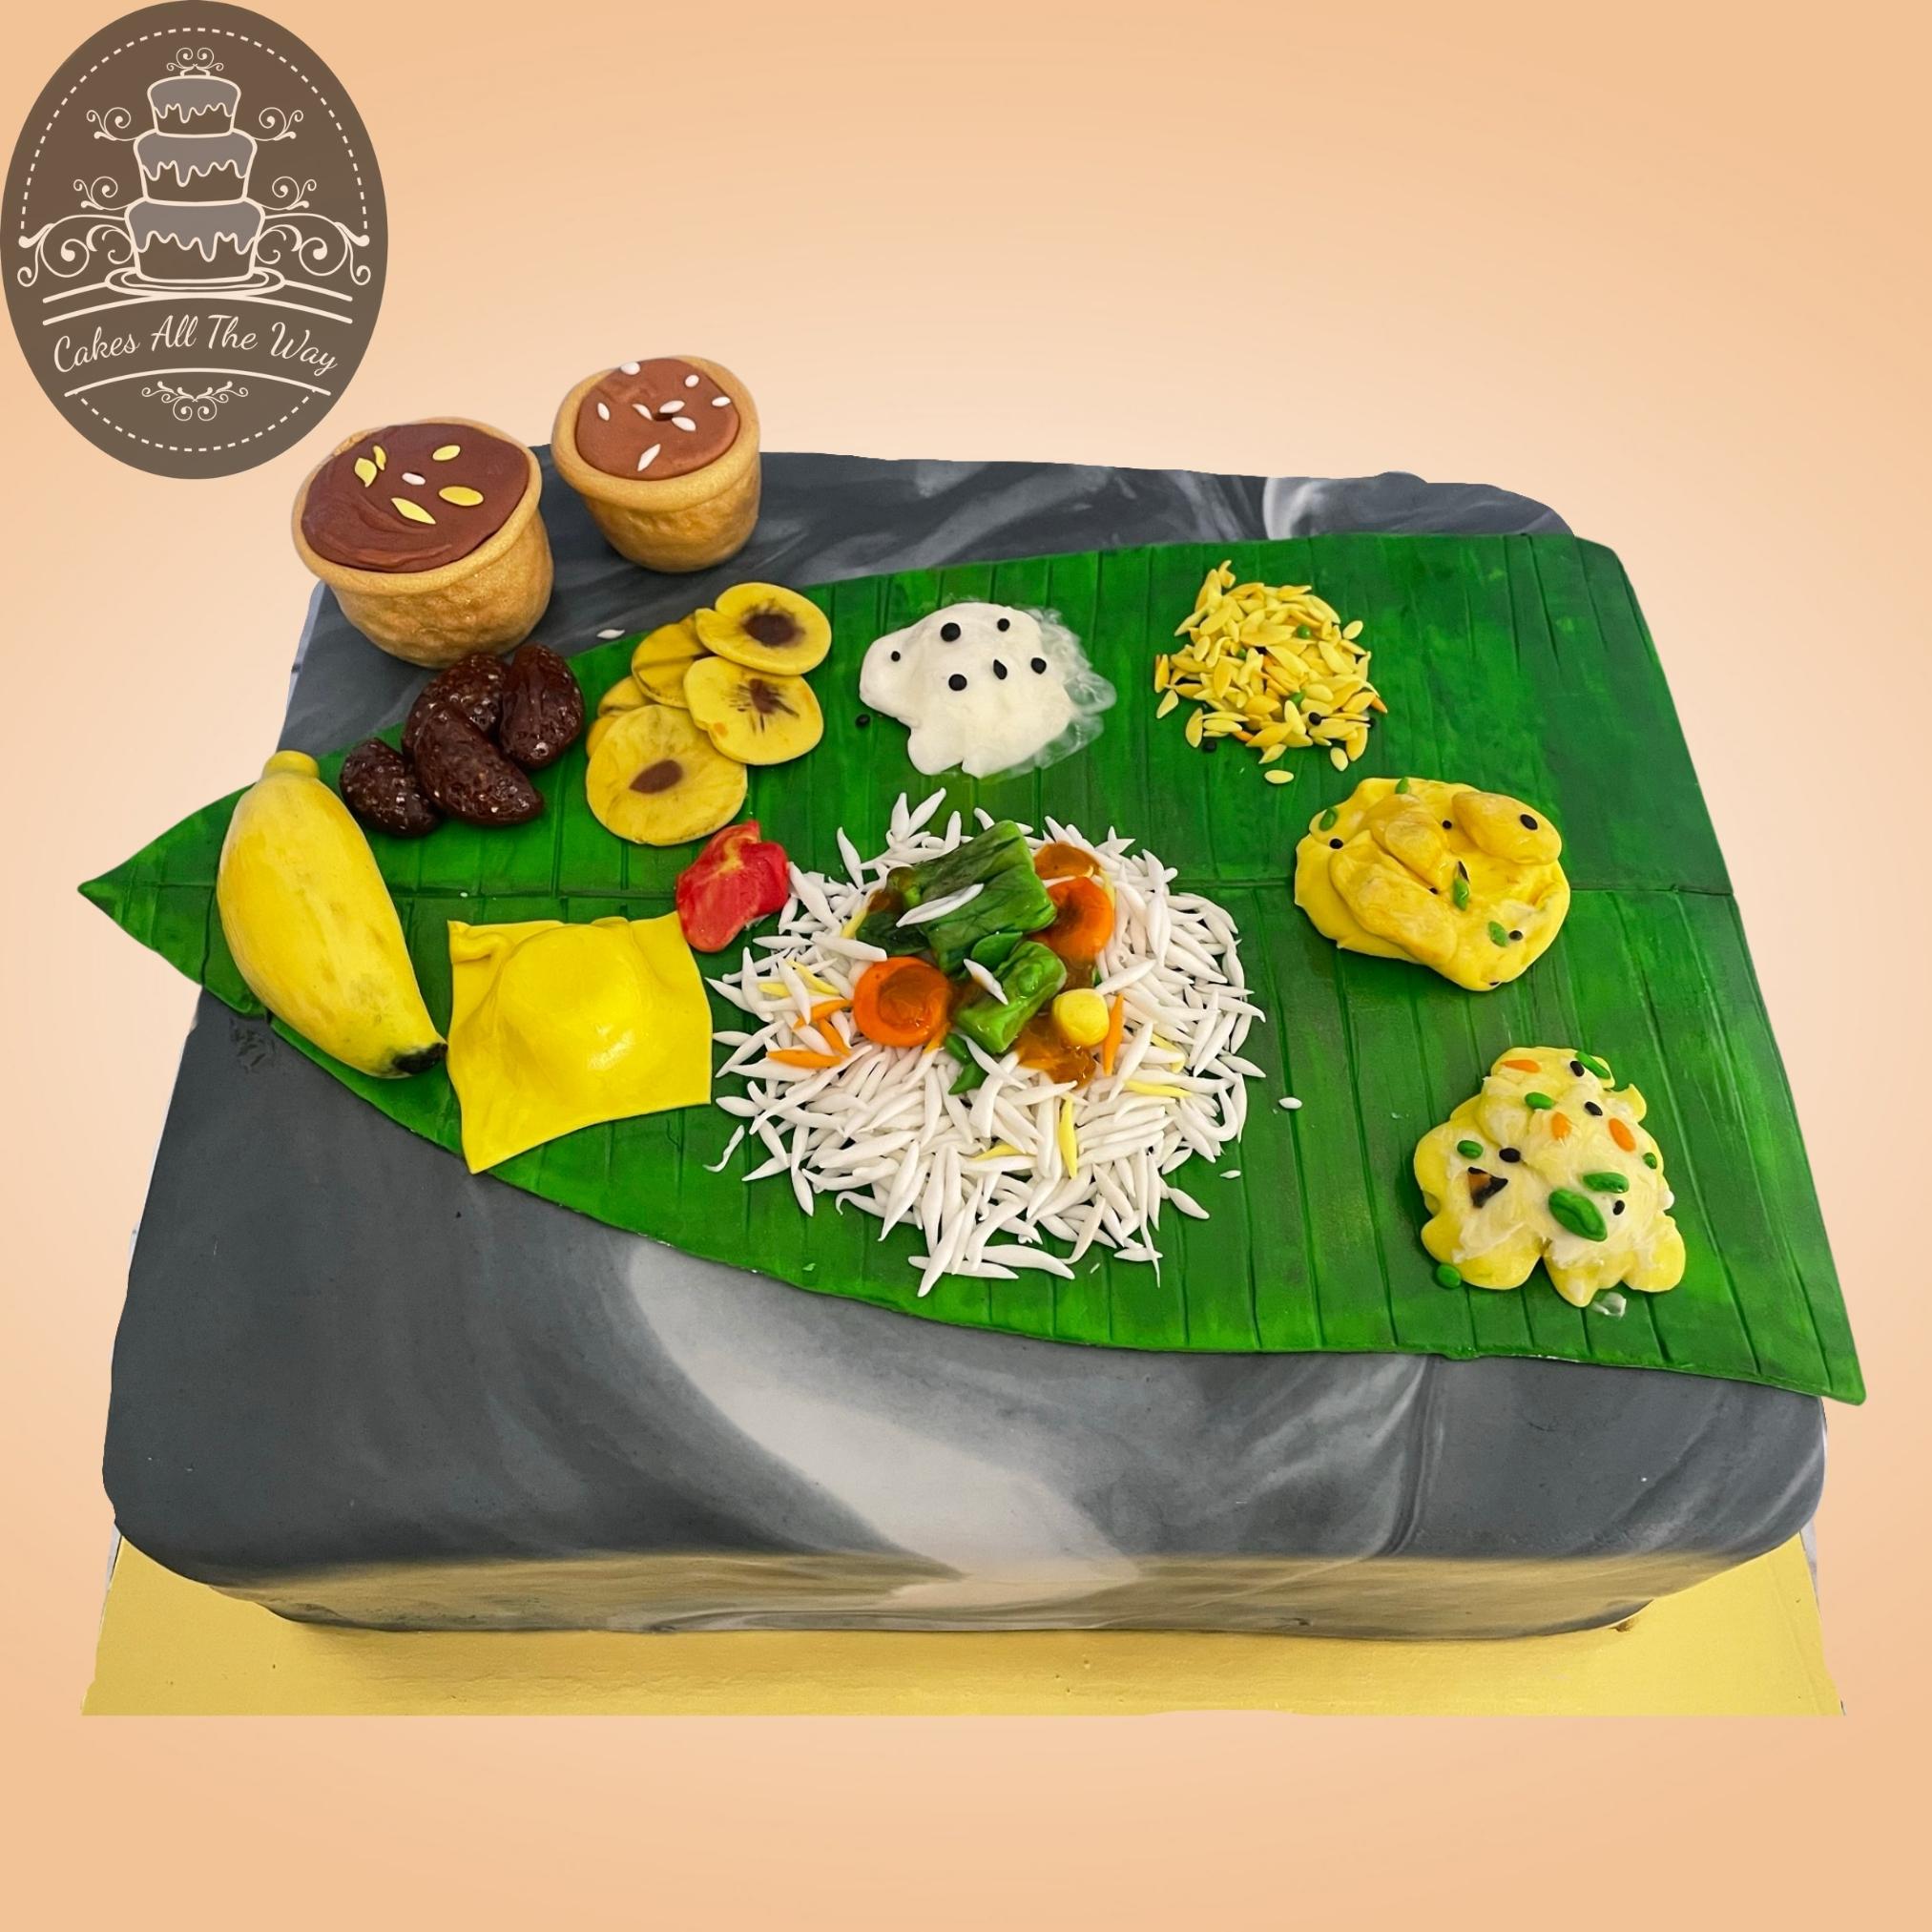 Shanti's Cakes - Onam Sadhya theme Cake | Facebook